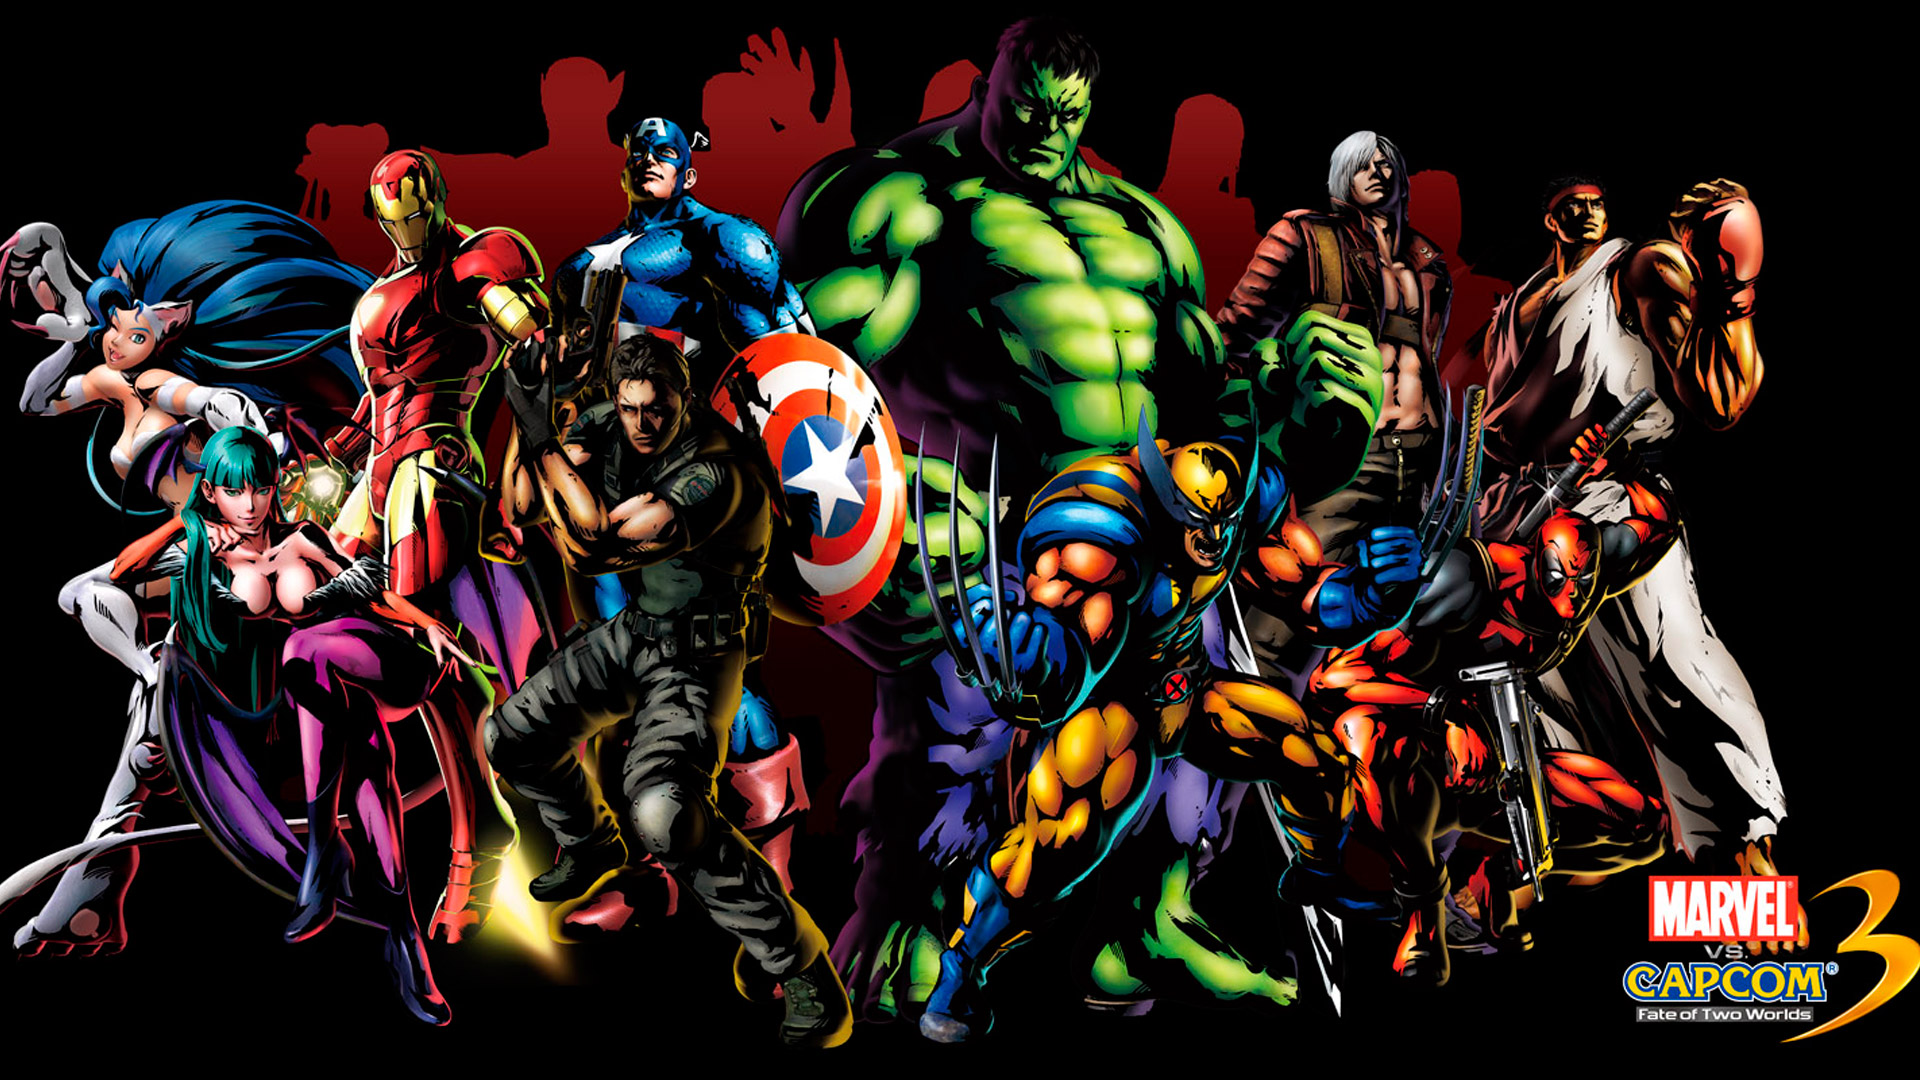 Marvel Heroes Wallpaper Full HD T35riig 4usky